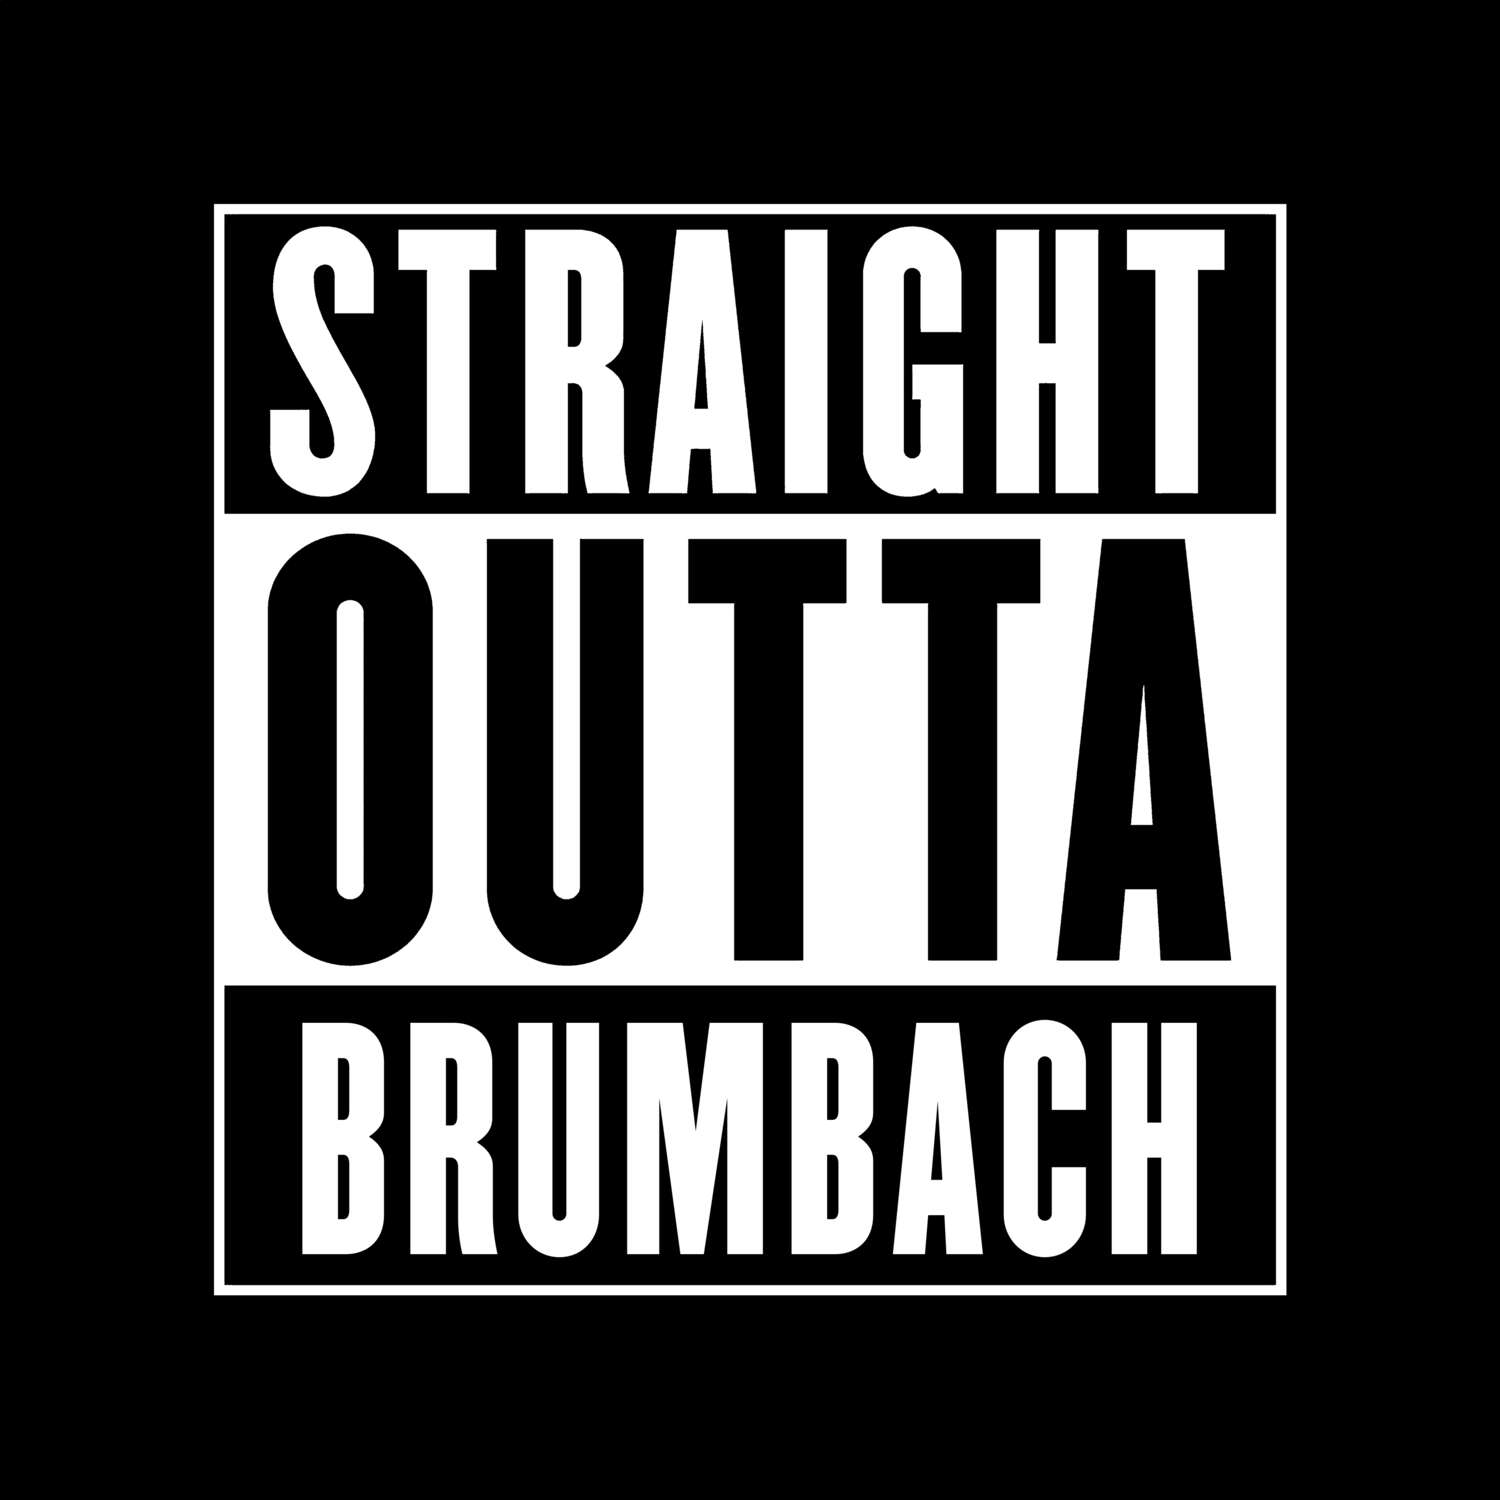 Brumbach T-Shirt »Straight Outta«